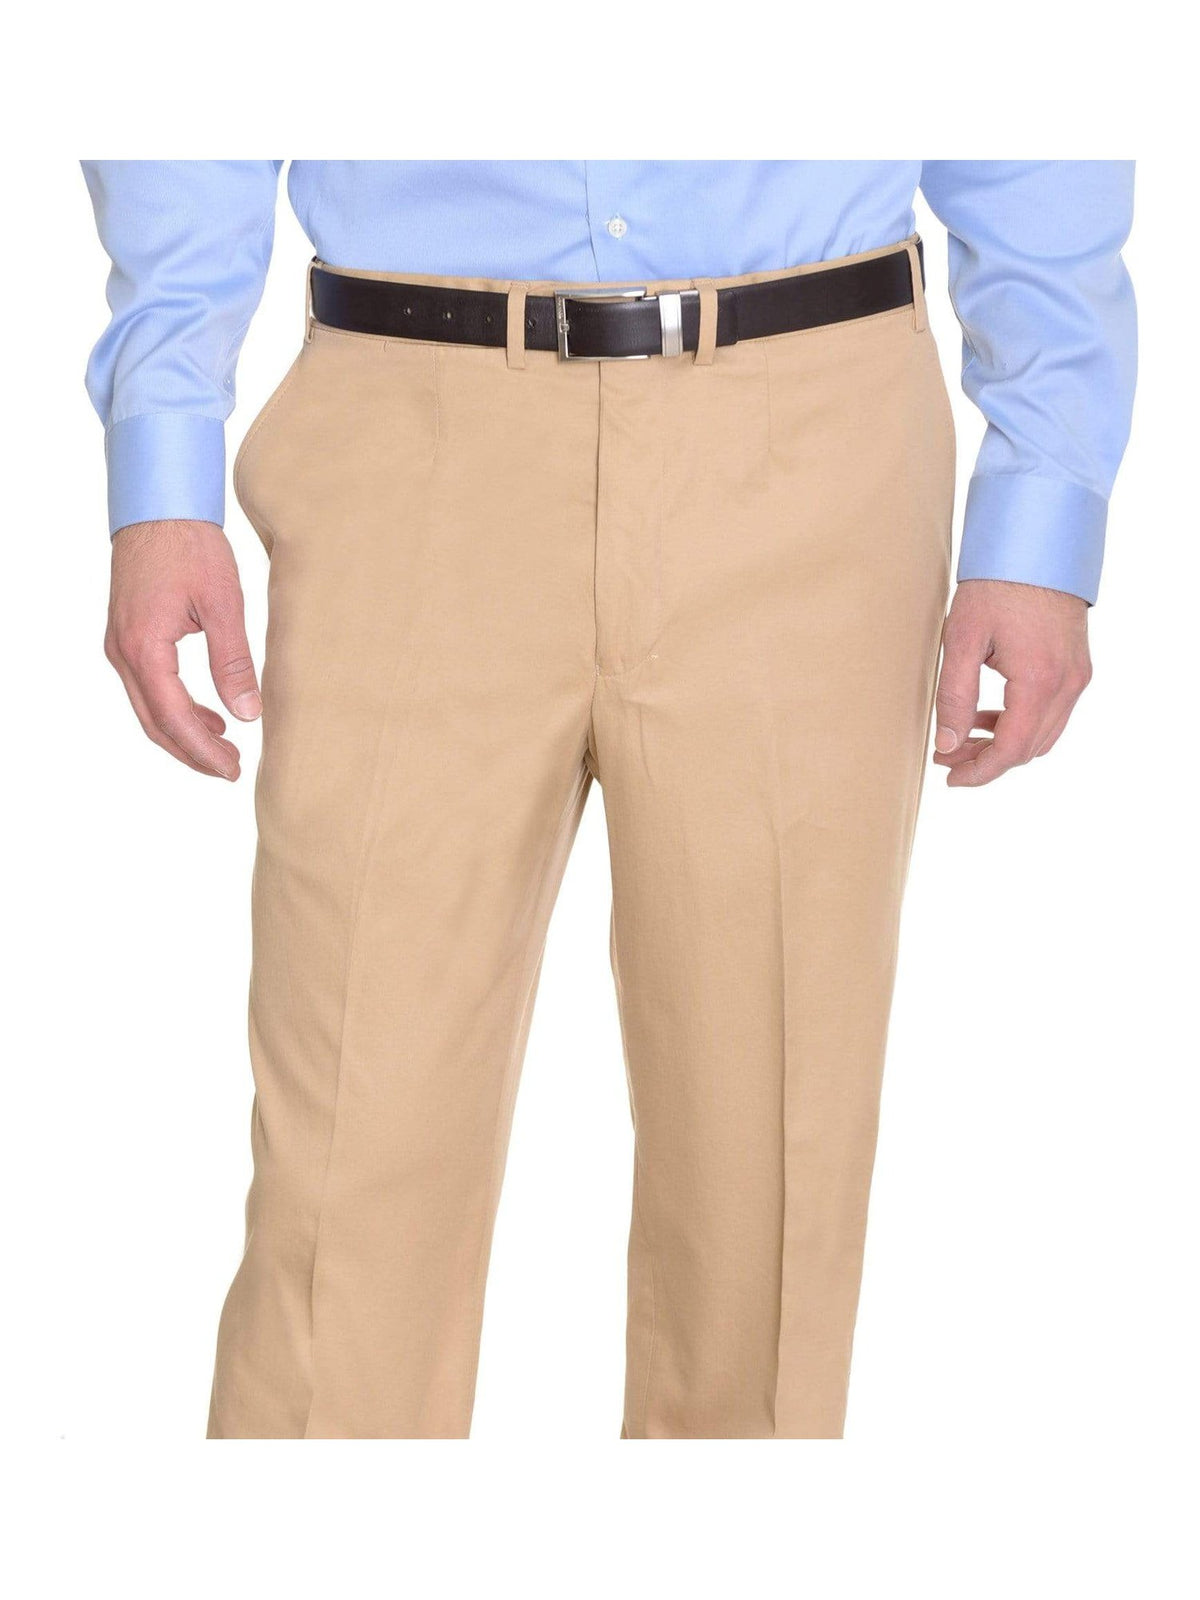 Crespi PANTS 32W Crespi Classic Fit Solid Tan Beige Flat Front Cotton Casual Khaki Pants